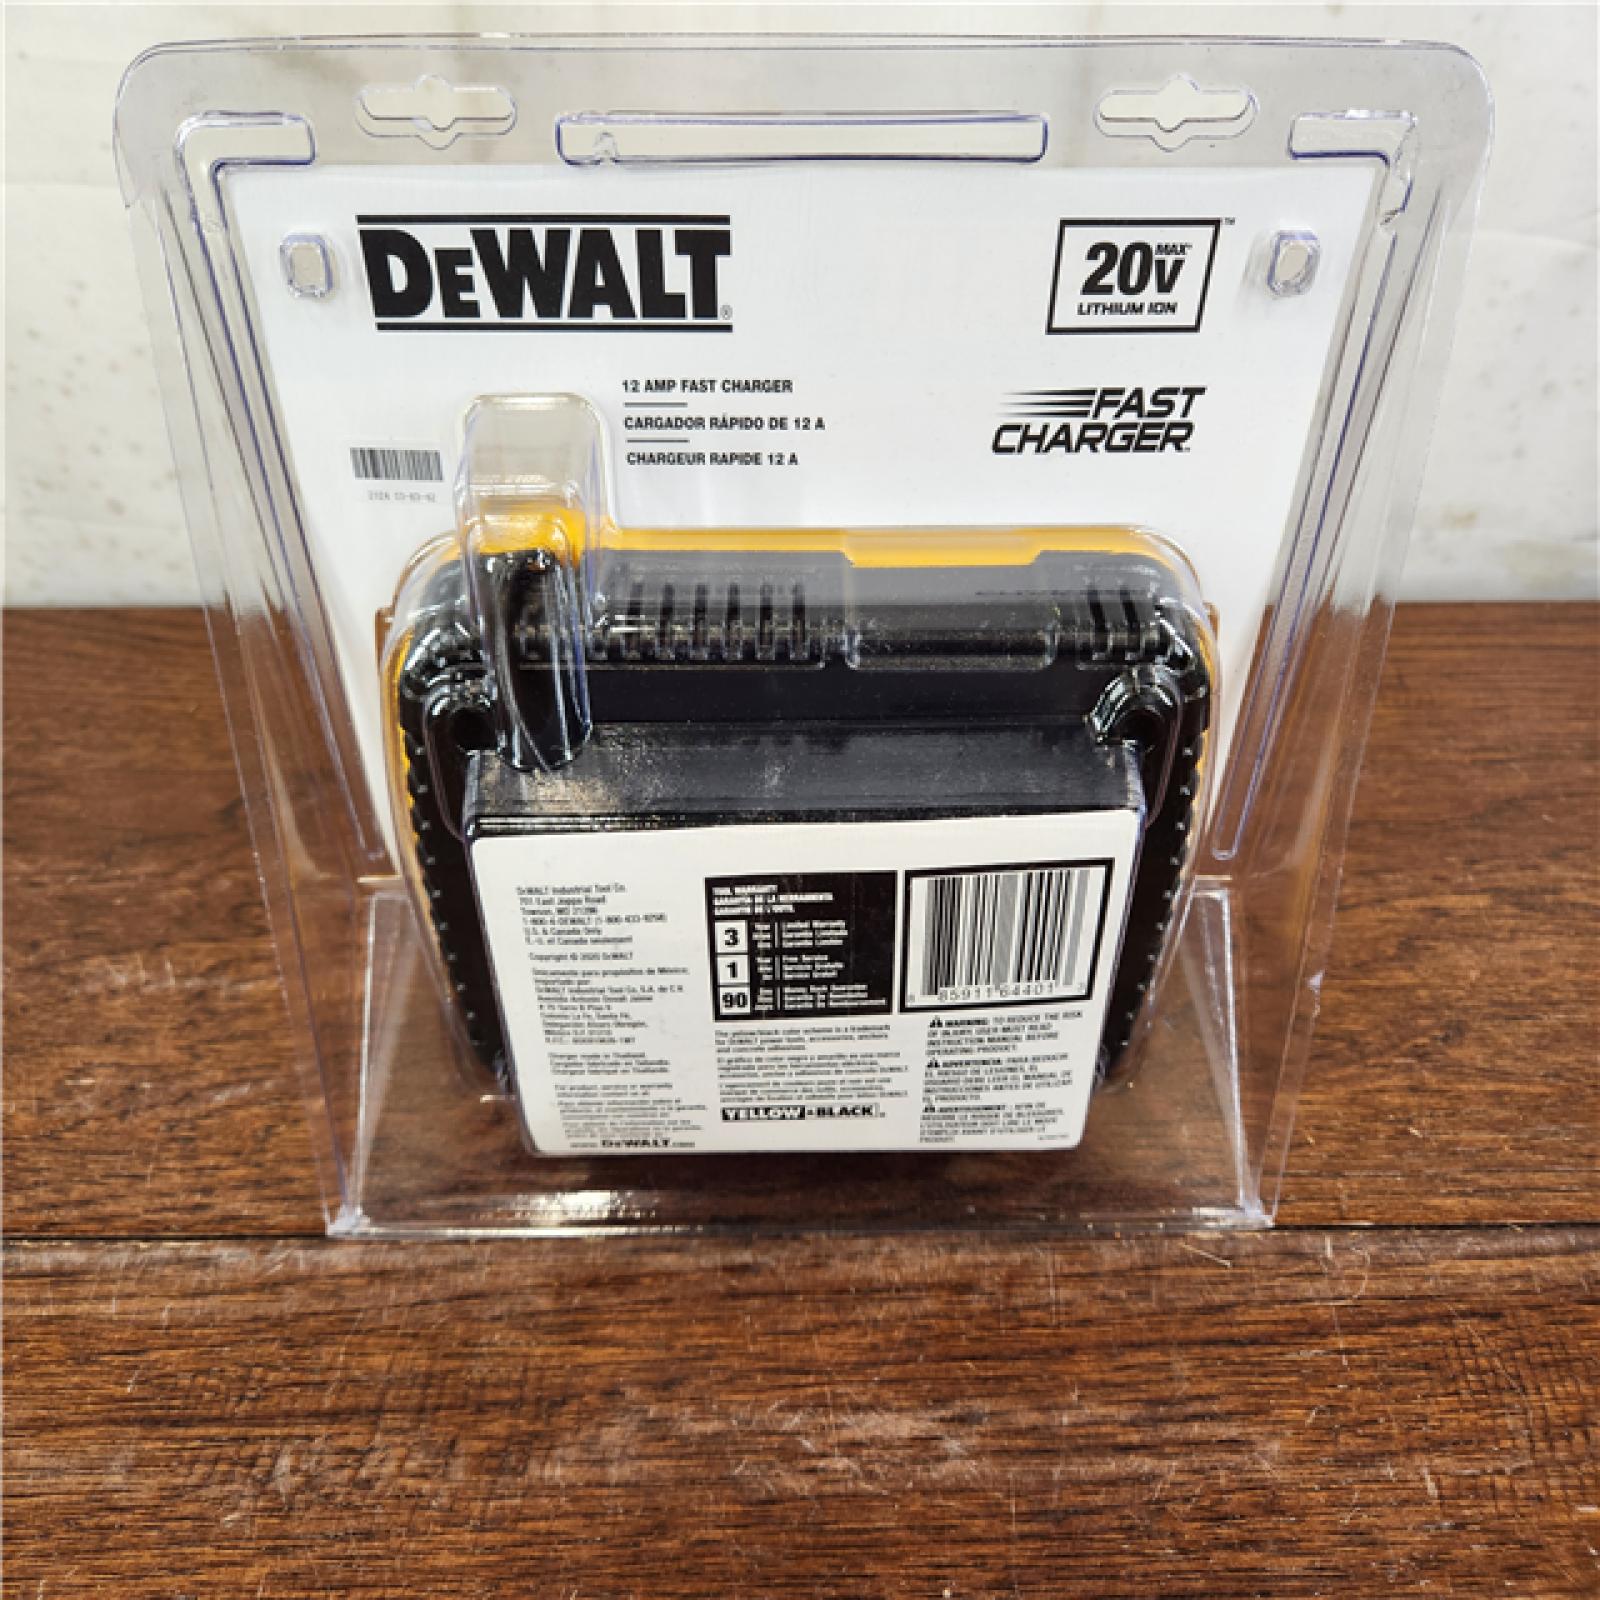 NEW! Dewalt-DCB1112 12-Amp Fast Charger